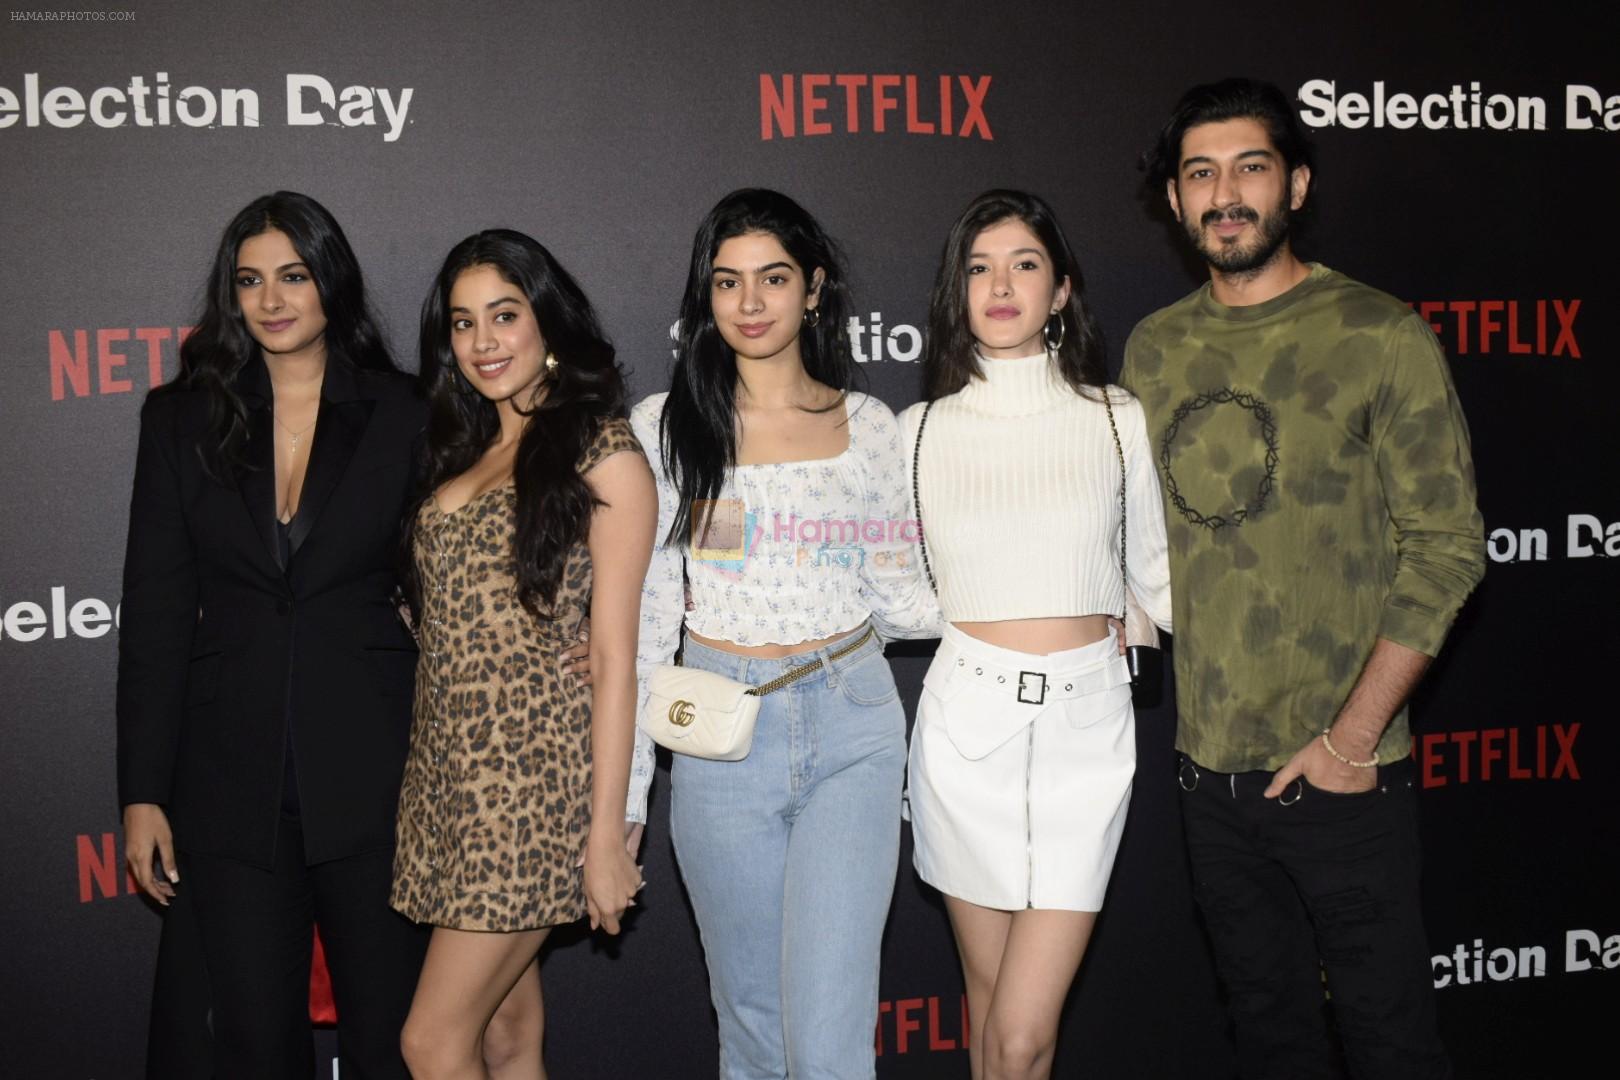 Rhea Kapoor, Janhvi Kapoor, Khushi Kapoor, Shanaya Kapoor, Mohit Marwah  at the Red Carpet of Netfix Upcoming Series Selection Day on 18th Dec 2018